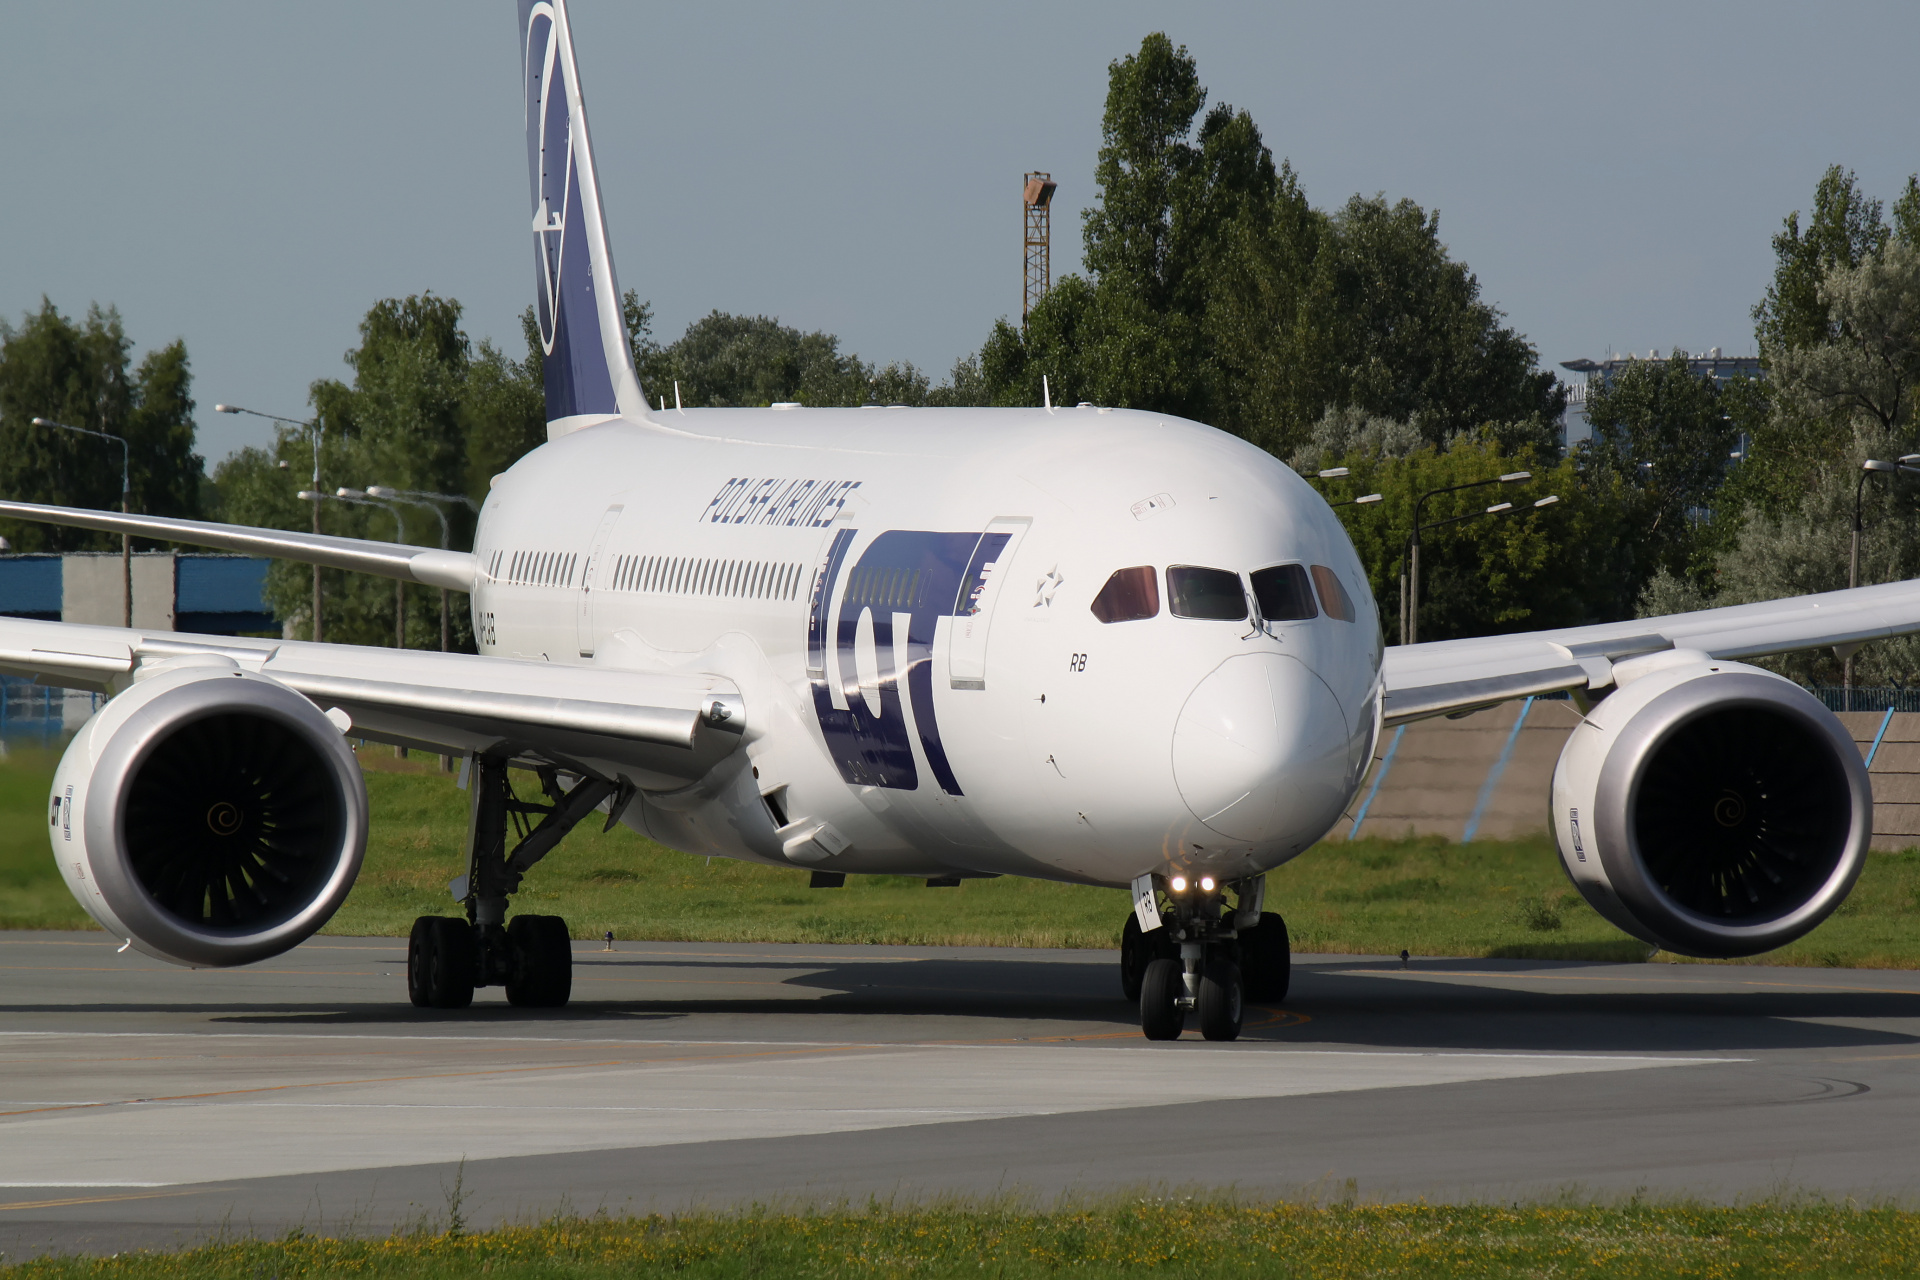 SP-LRB (Aircraft » EPWA Spotting » Boeing 787-8 Dreamliner » LOT Polish Airlines)